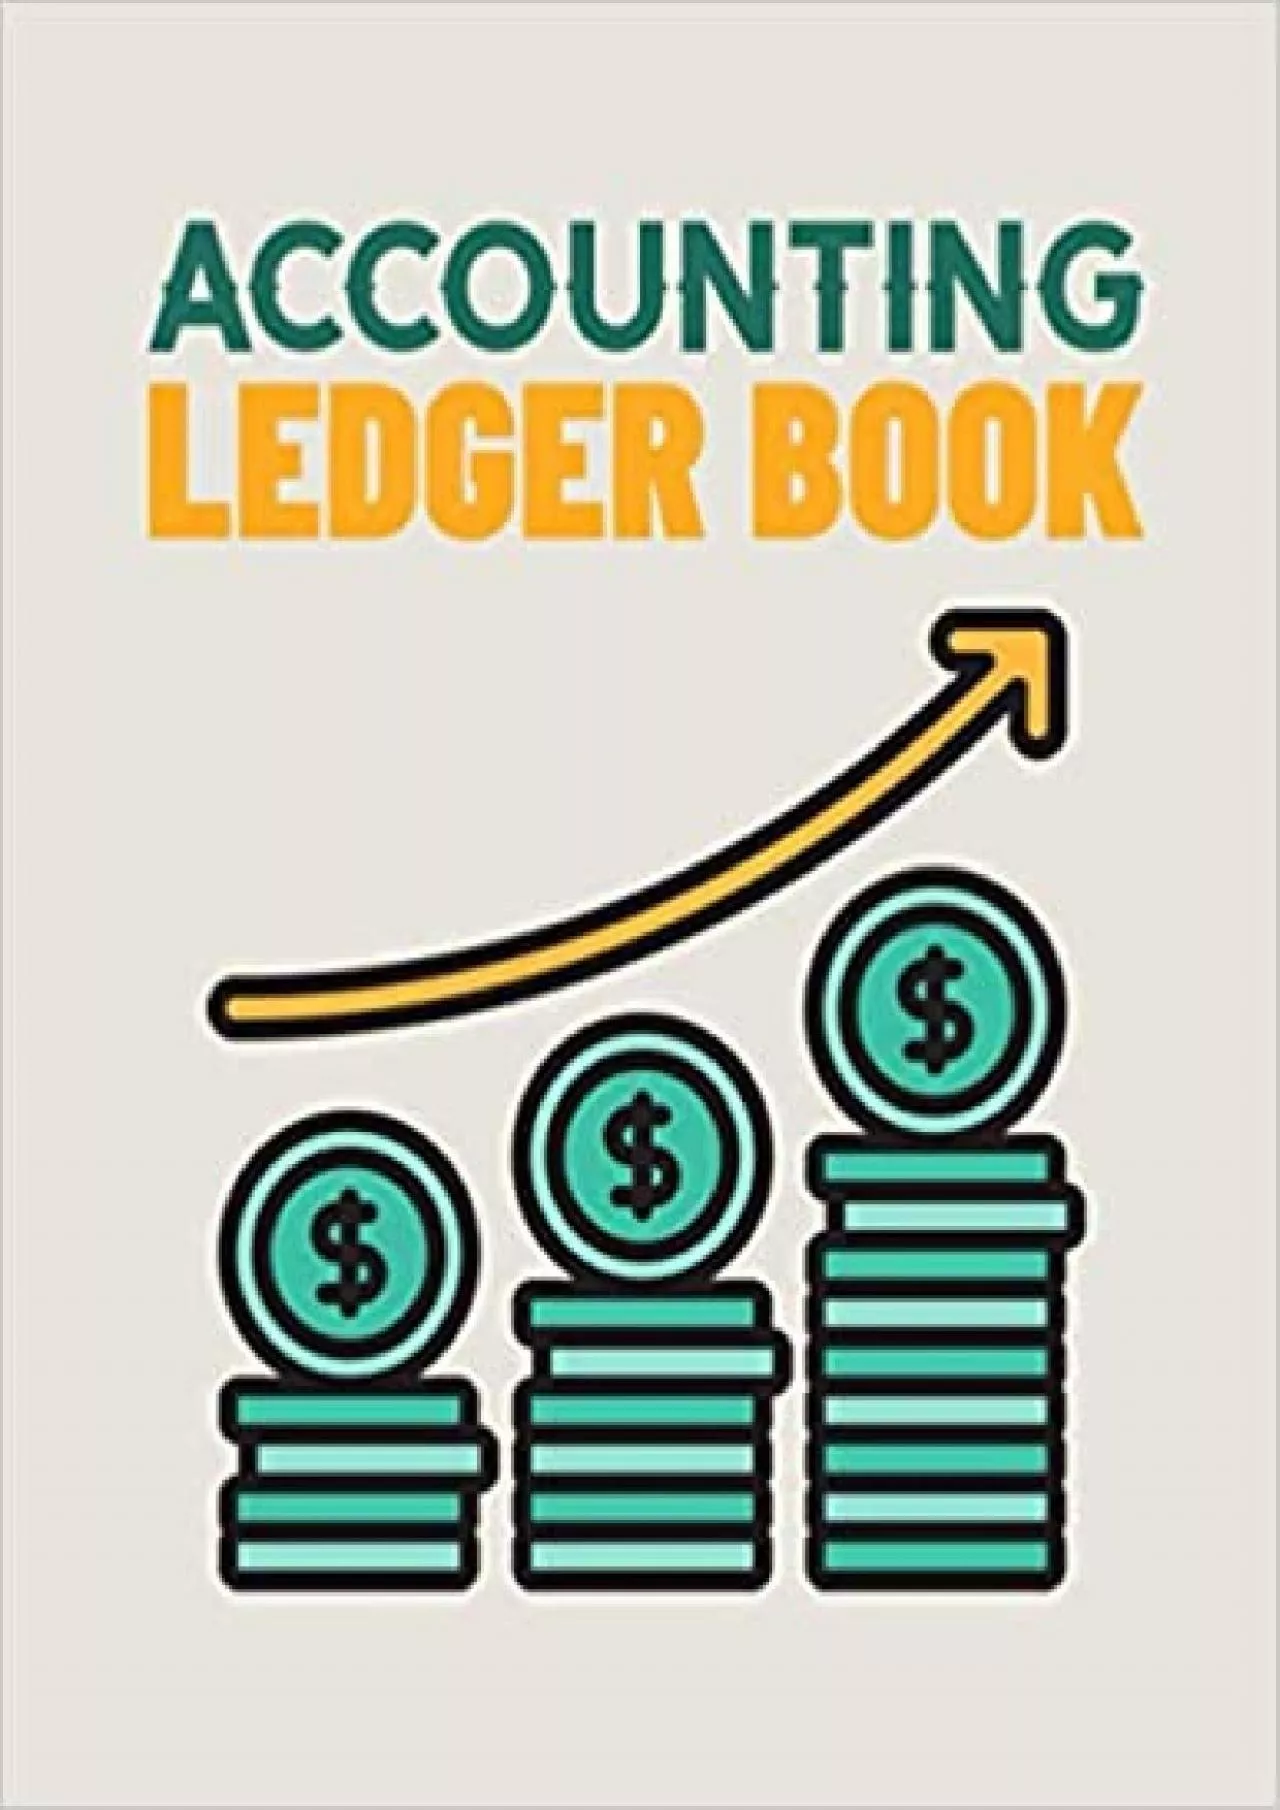 Accounting Ledger Book 3 Column Large print for Bookkeeping: libreta de contabilidad gift